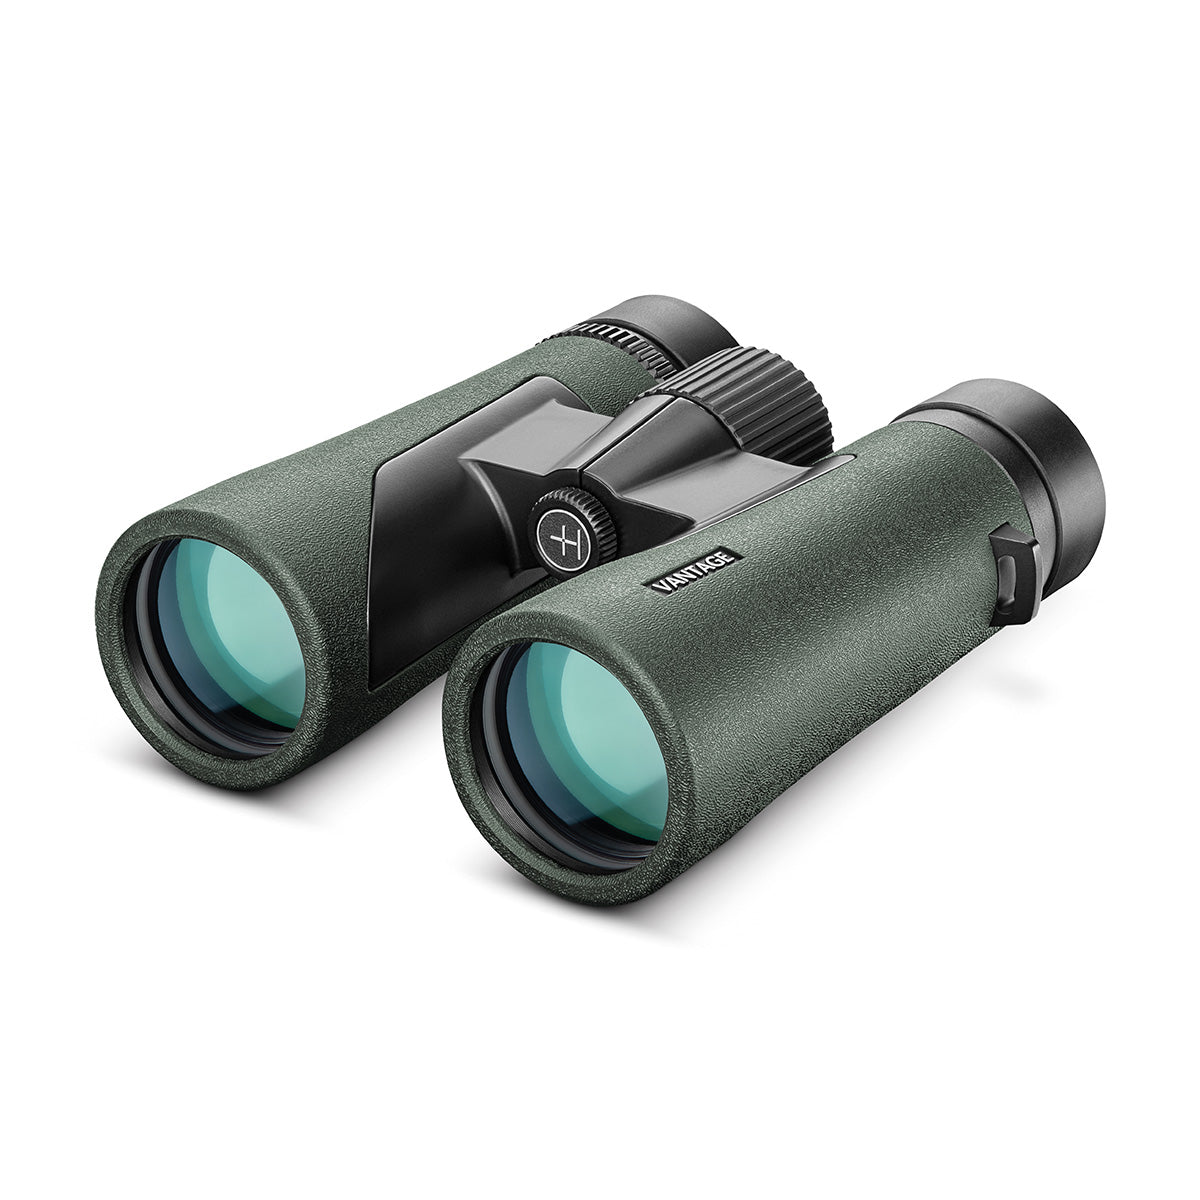 Hawke Vantage 10x42 Binoculars - Green